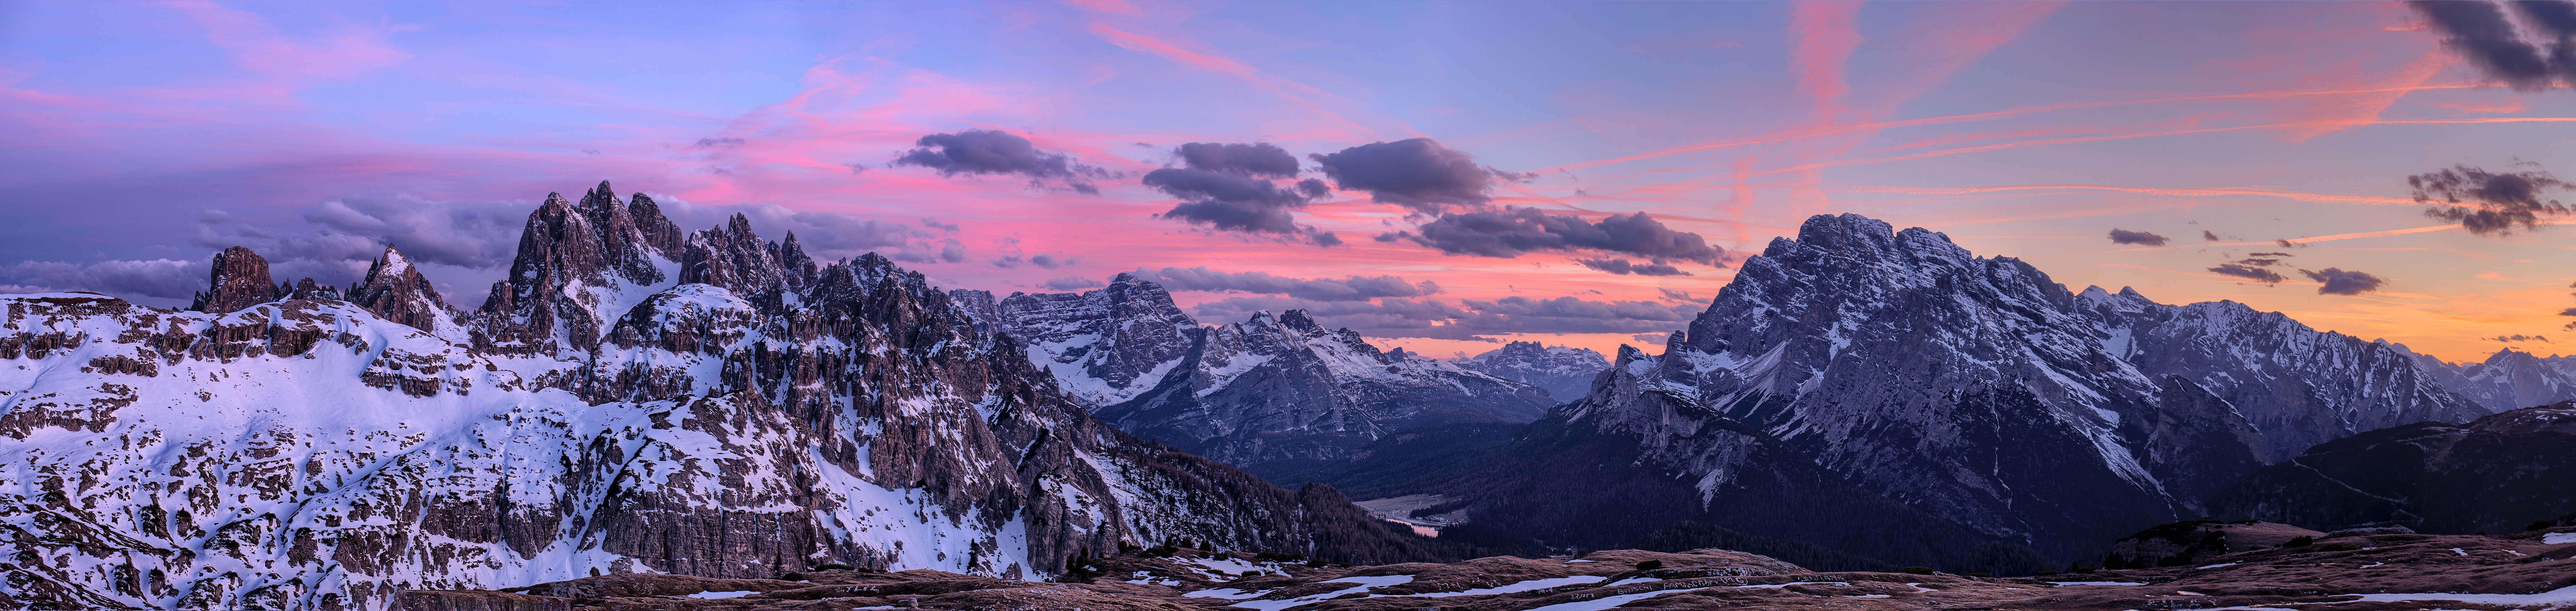 Panorama of Dolomites mountain range in Italy